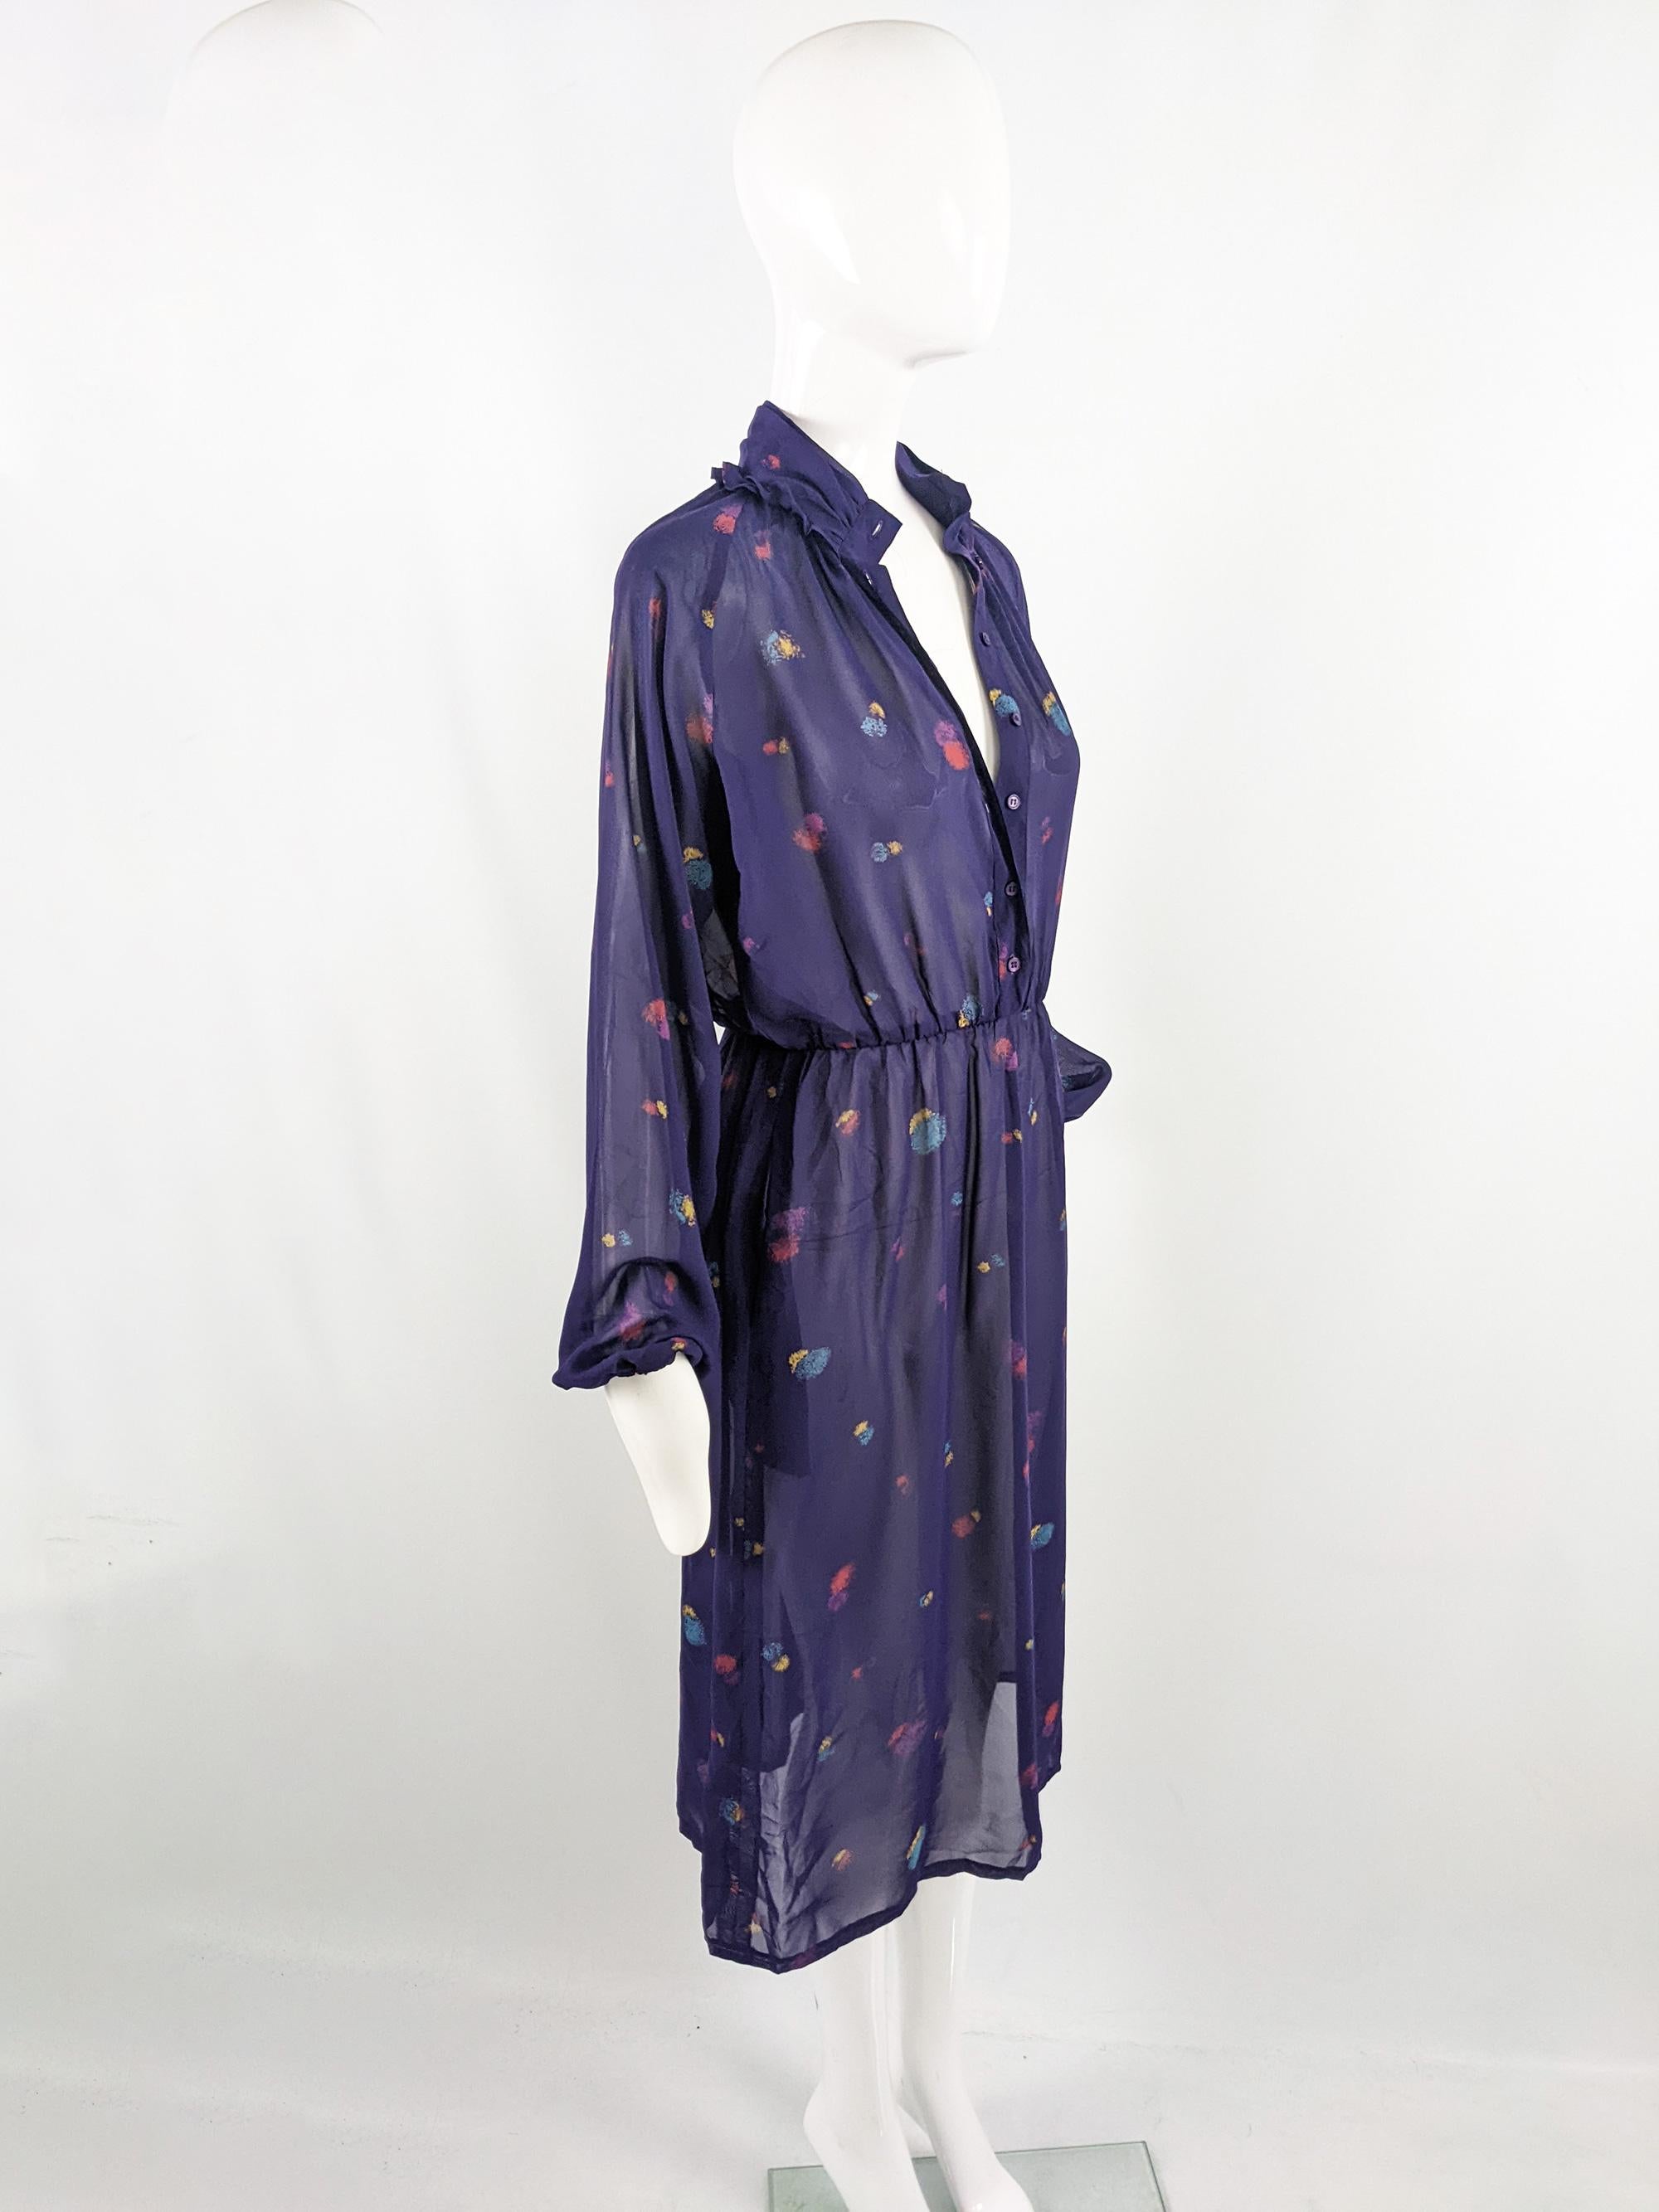 Aroche Paris Vintage 1970s Sheer Purple Ruffle Collar High Neck Shirt Dress For Sale 3